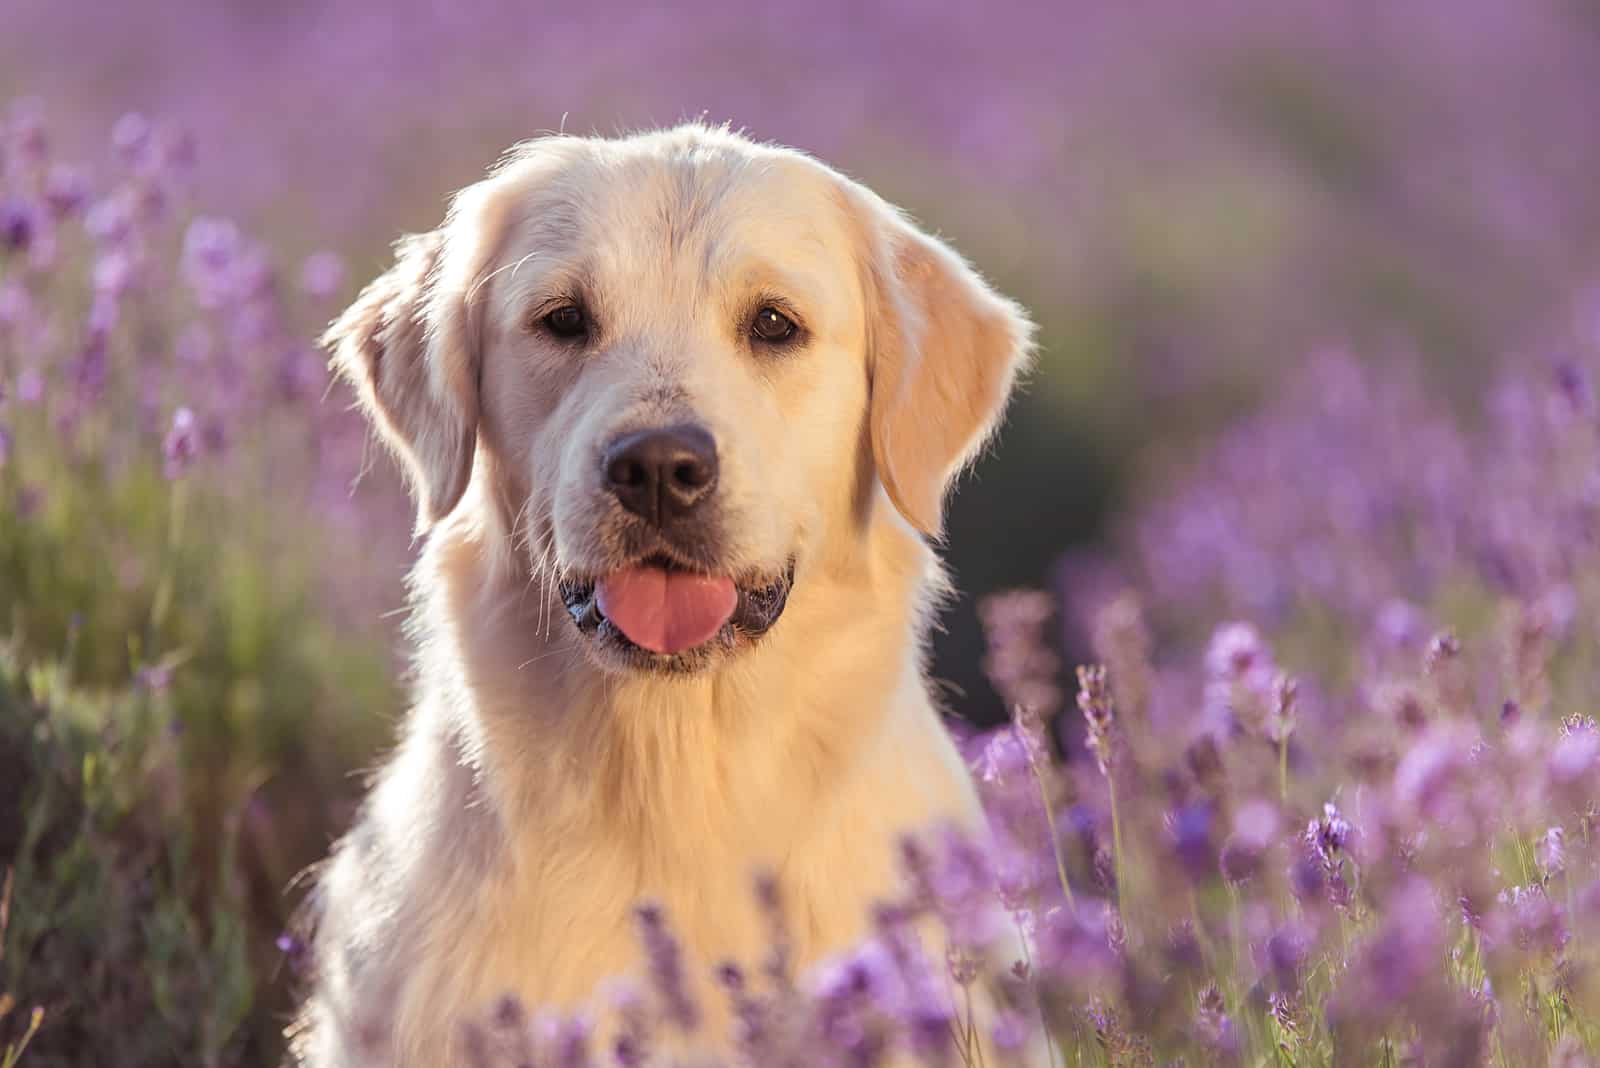 Beautiful golden retriever dog in the lavender field